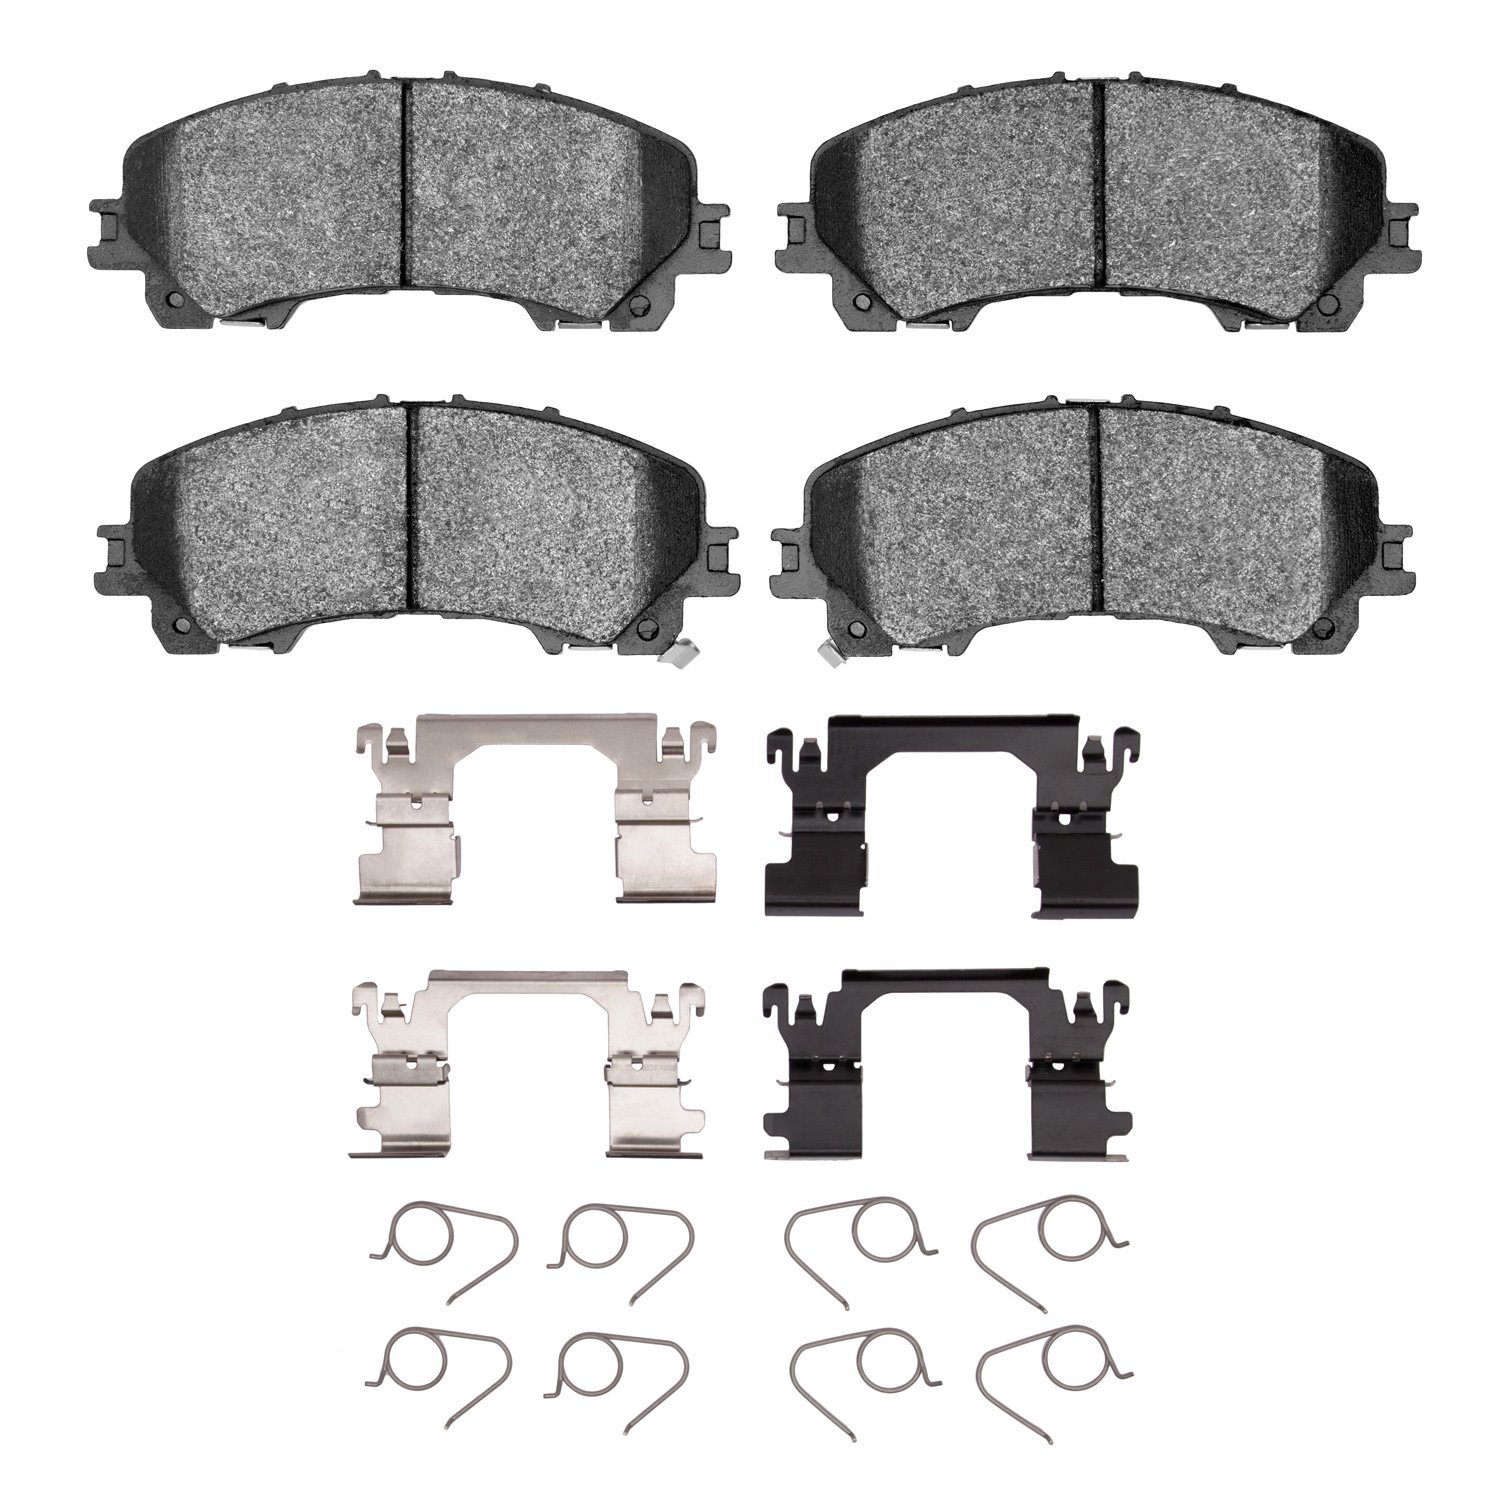 1310-1736-02 3000-Series Ceramic Brake Pads & Hardware Kit, Fits Select Infiniti/Nissan, Position: Front